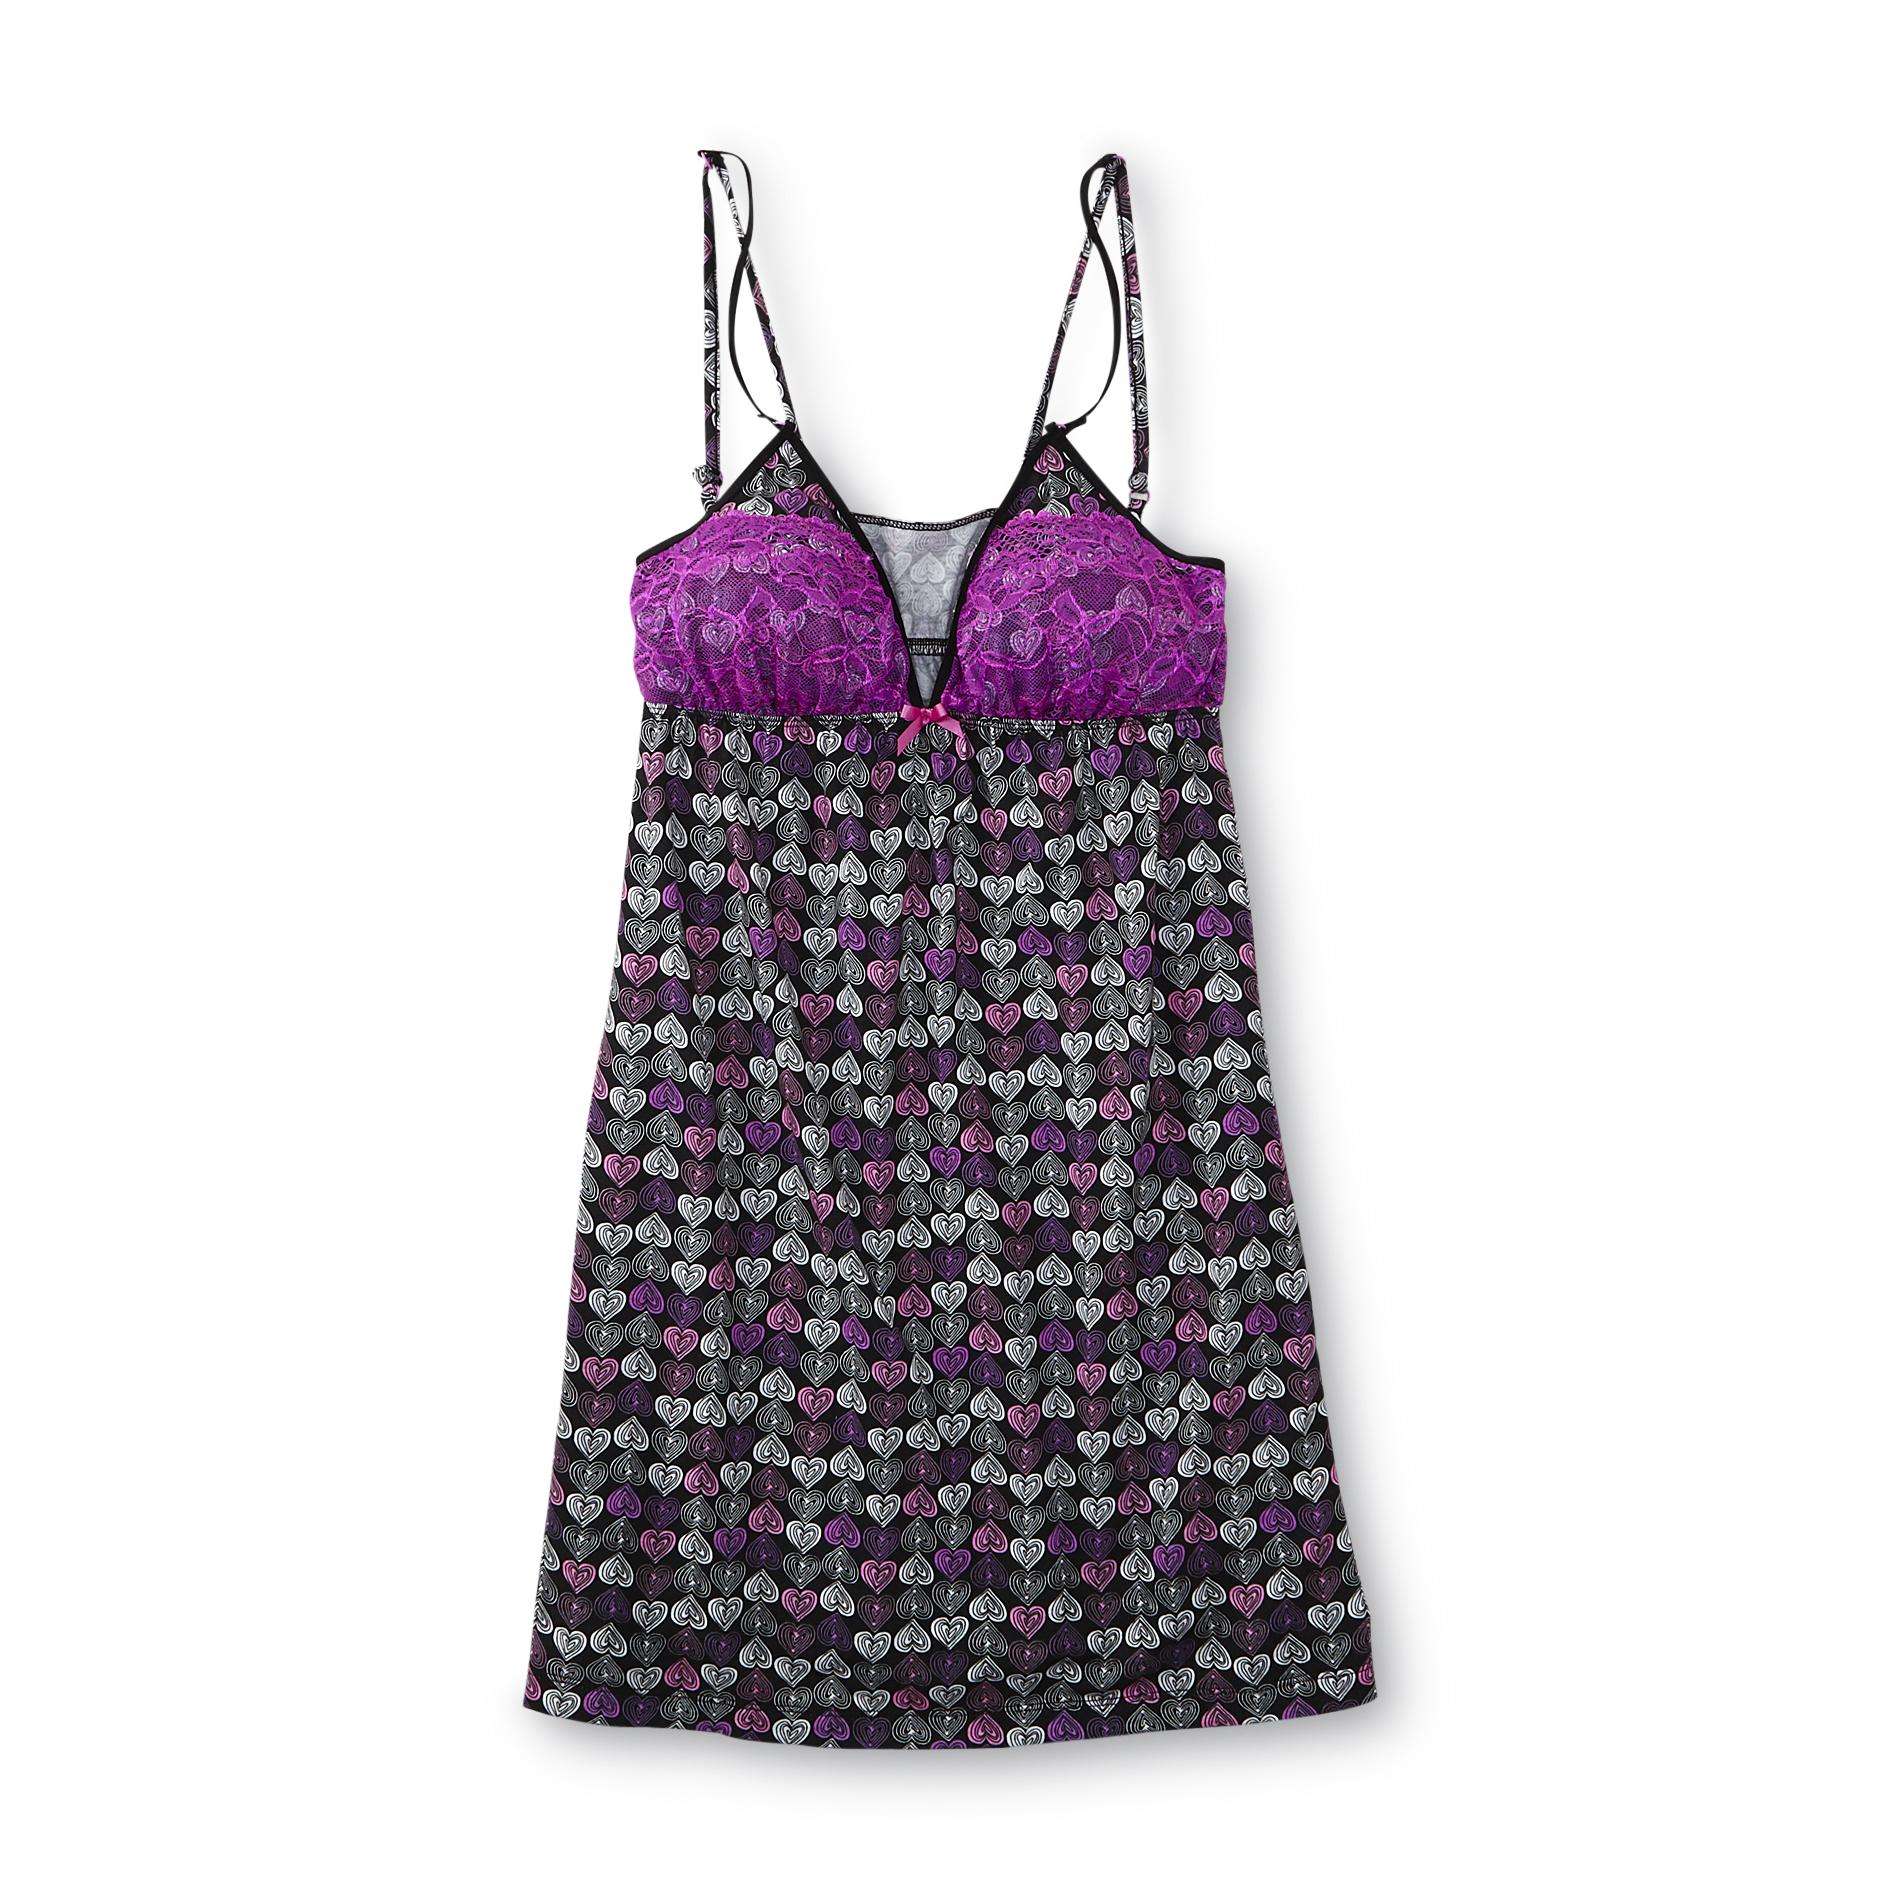 Joe Boxer Women's Knit Chemise Nightgown - Hearts